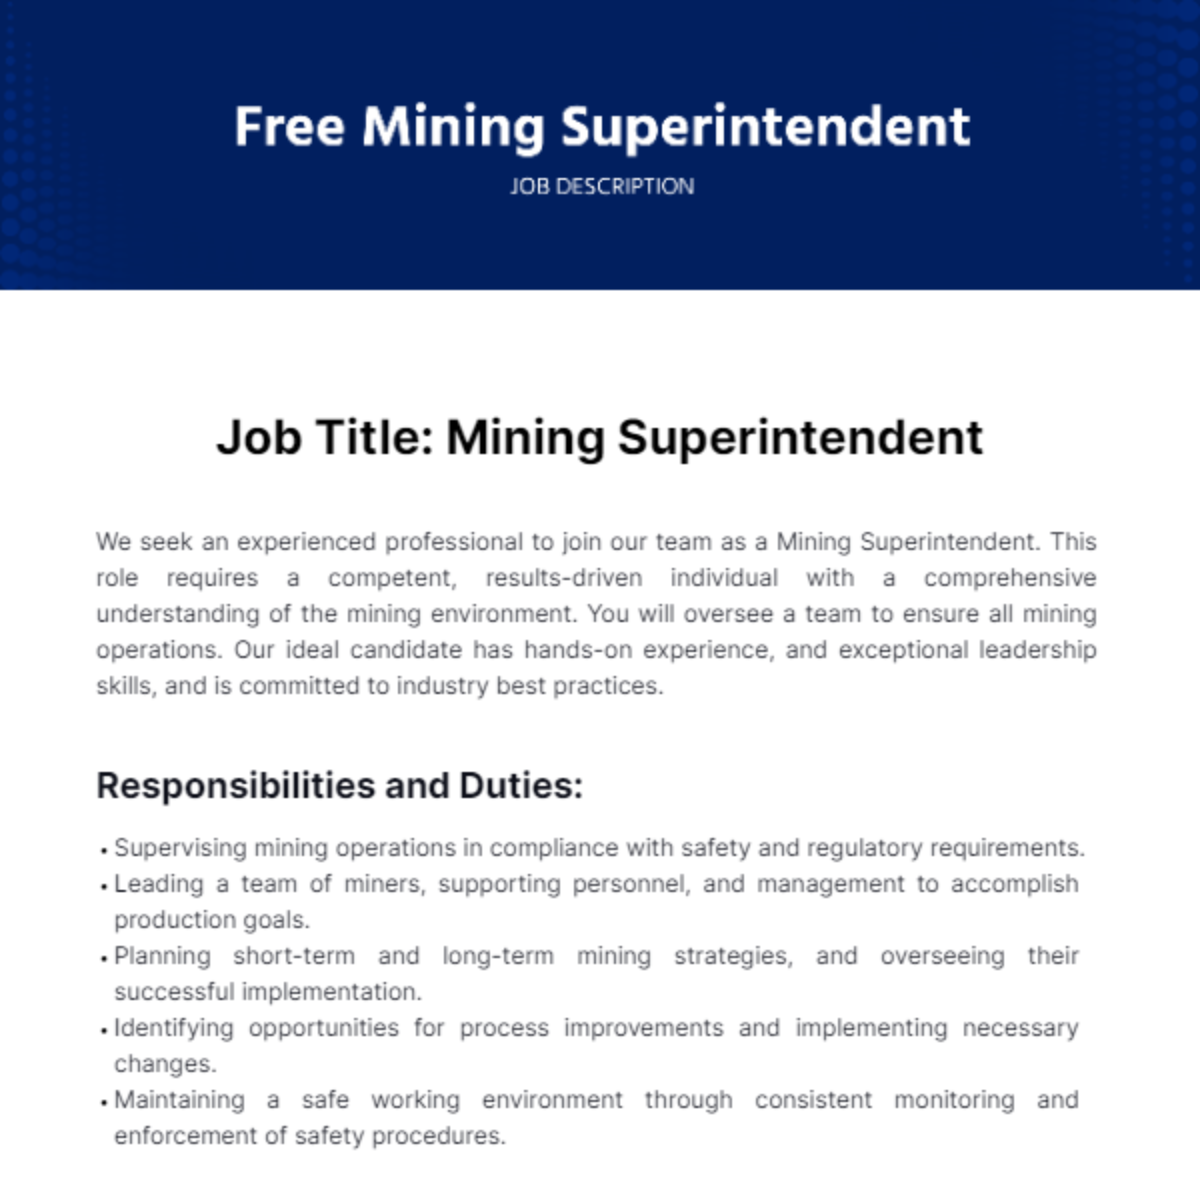 Free Mining Superintendent Job Description Template